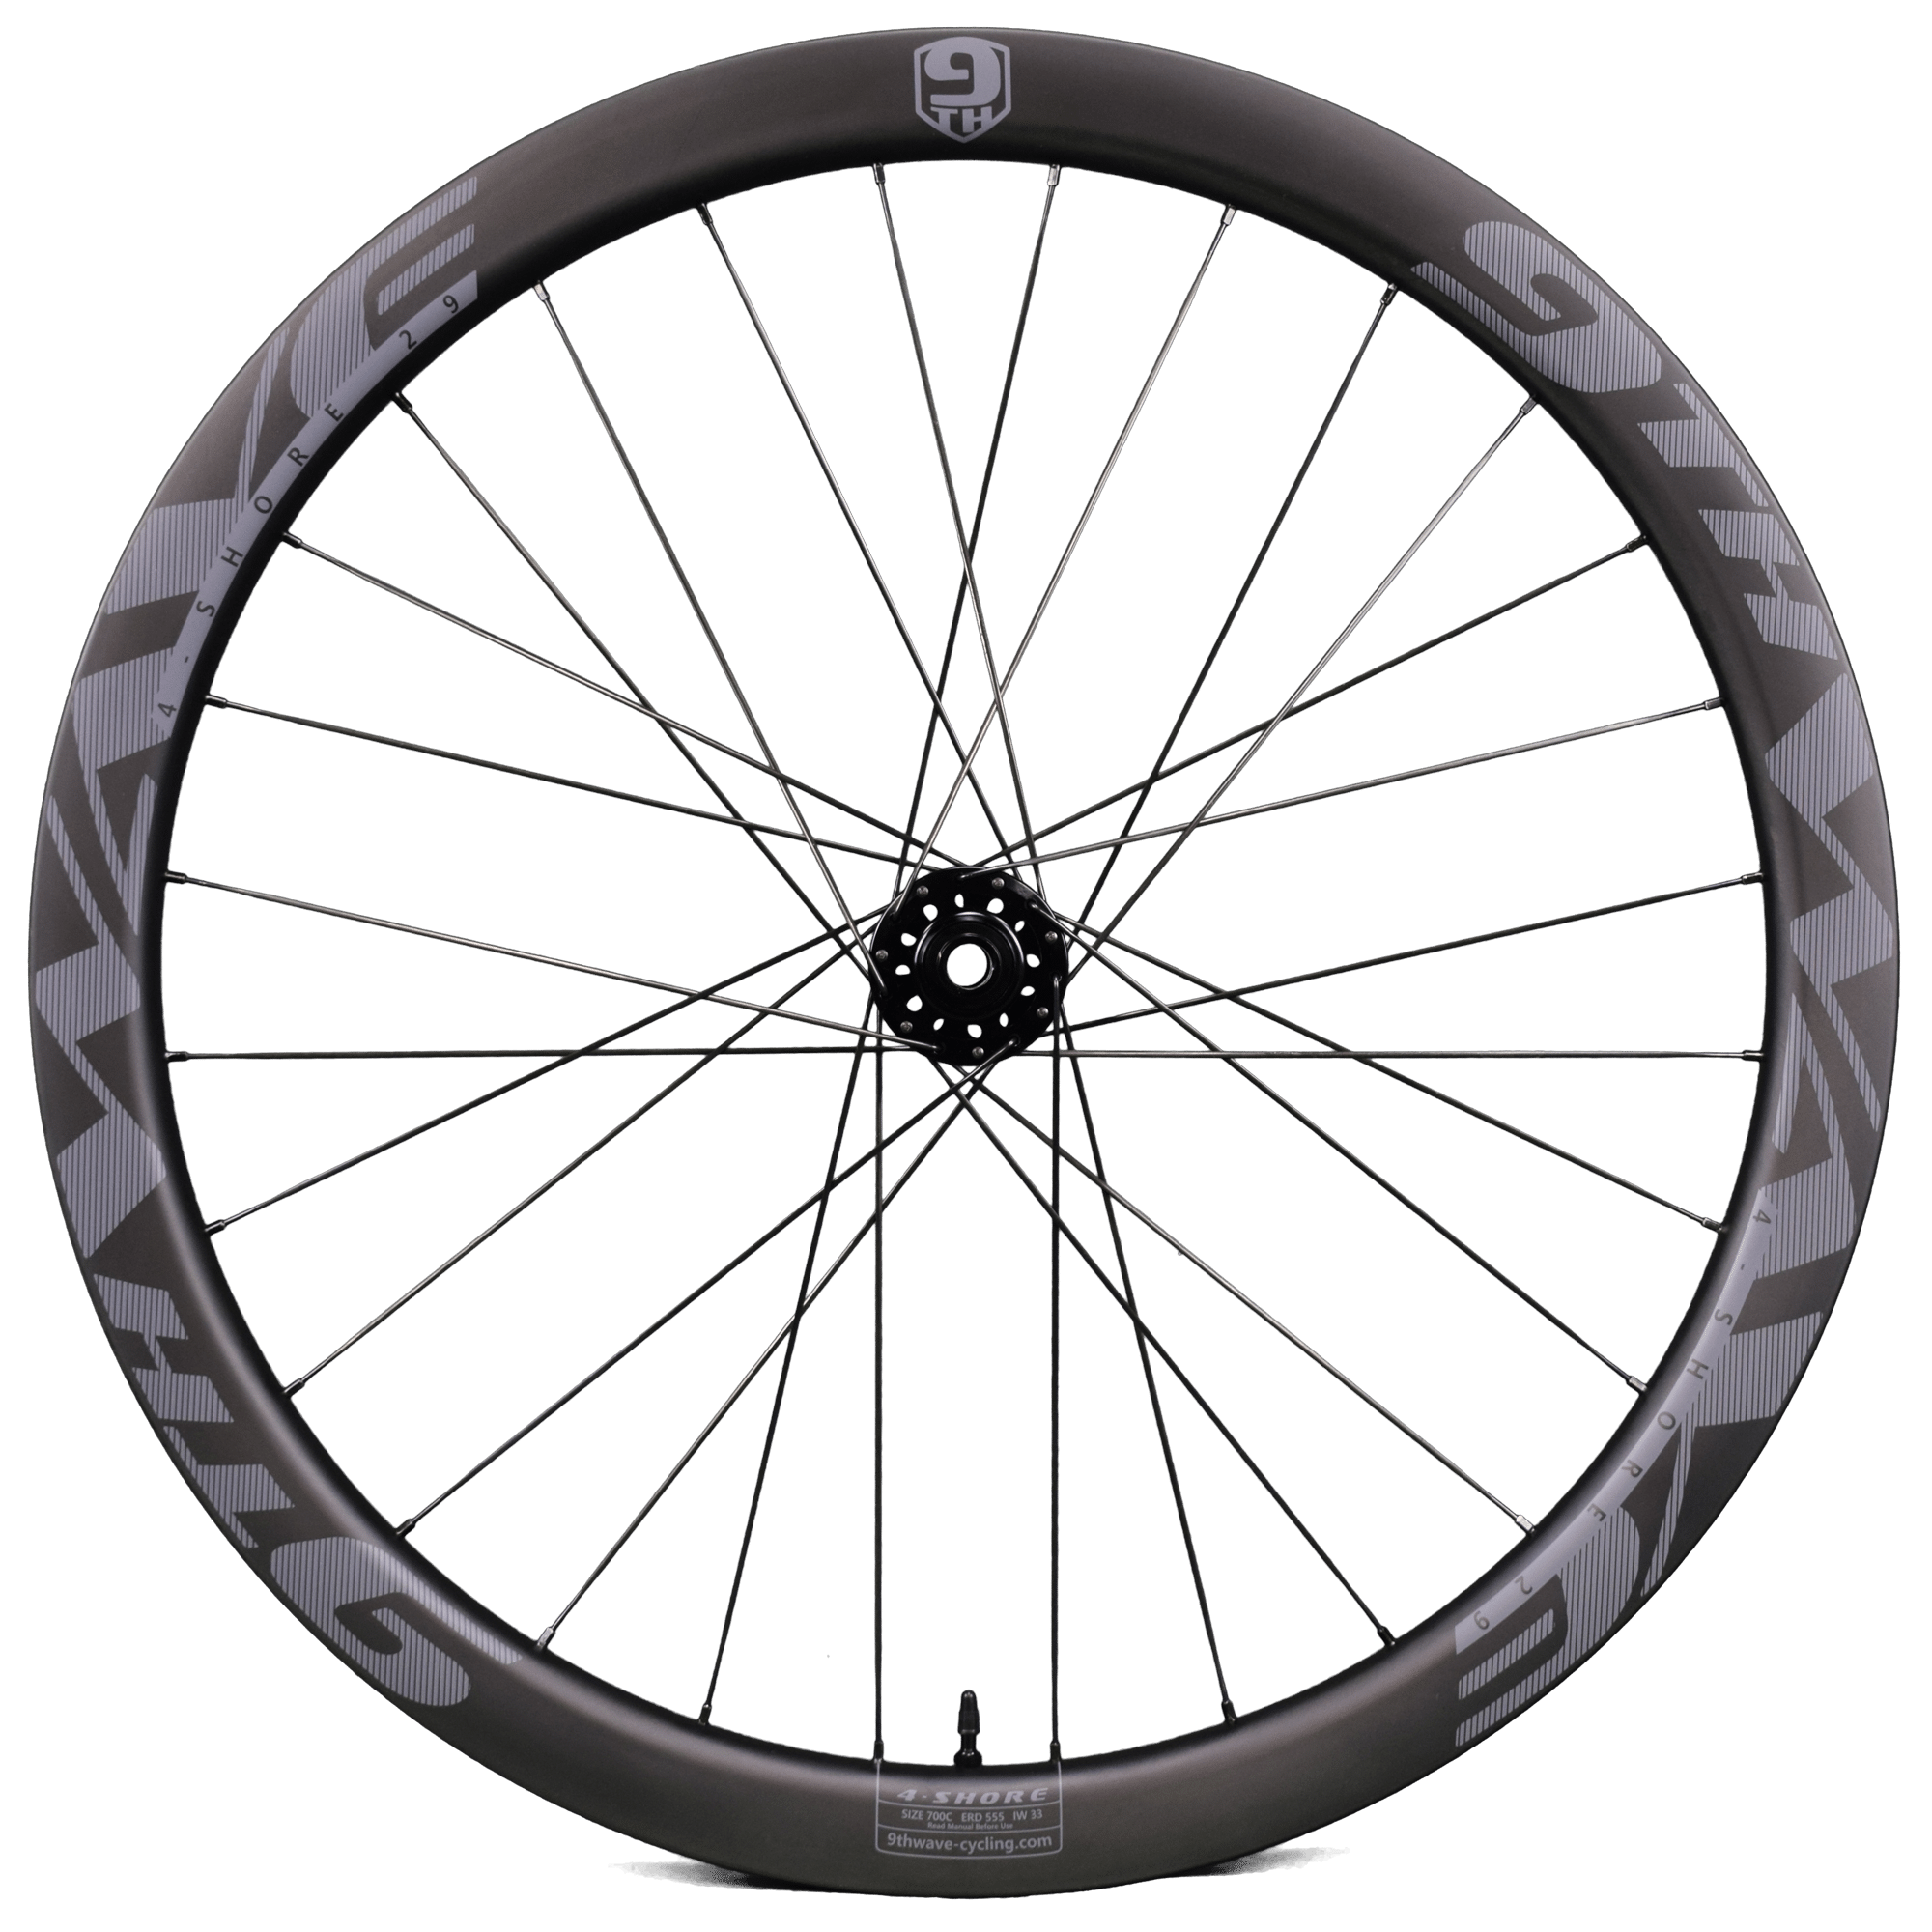  shore wheels th. Wheel clipart bike wheel